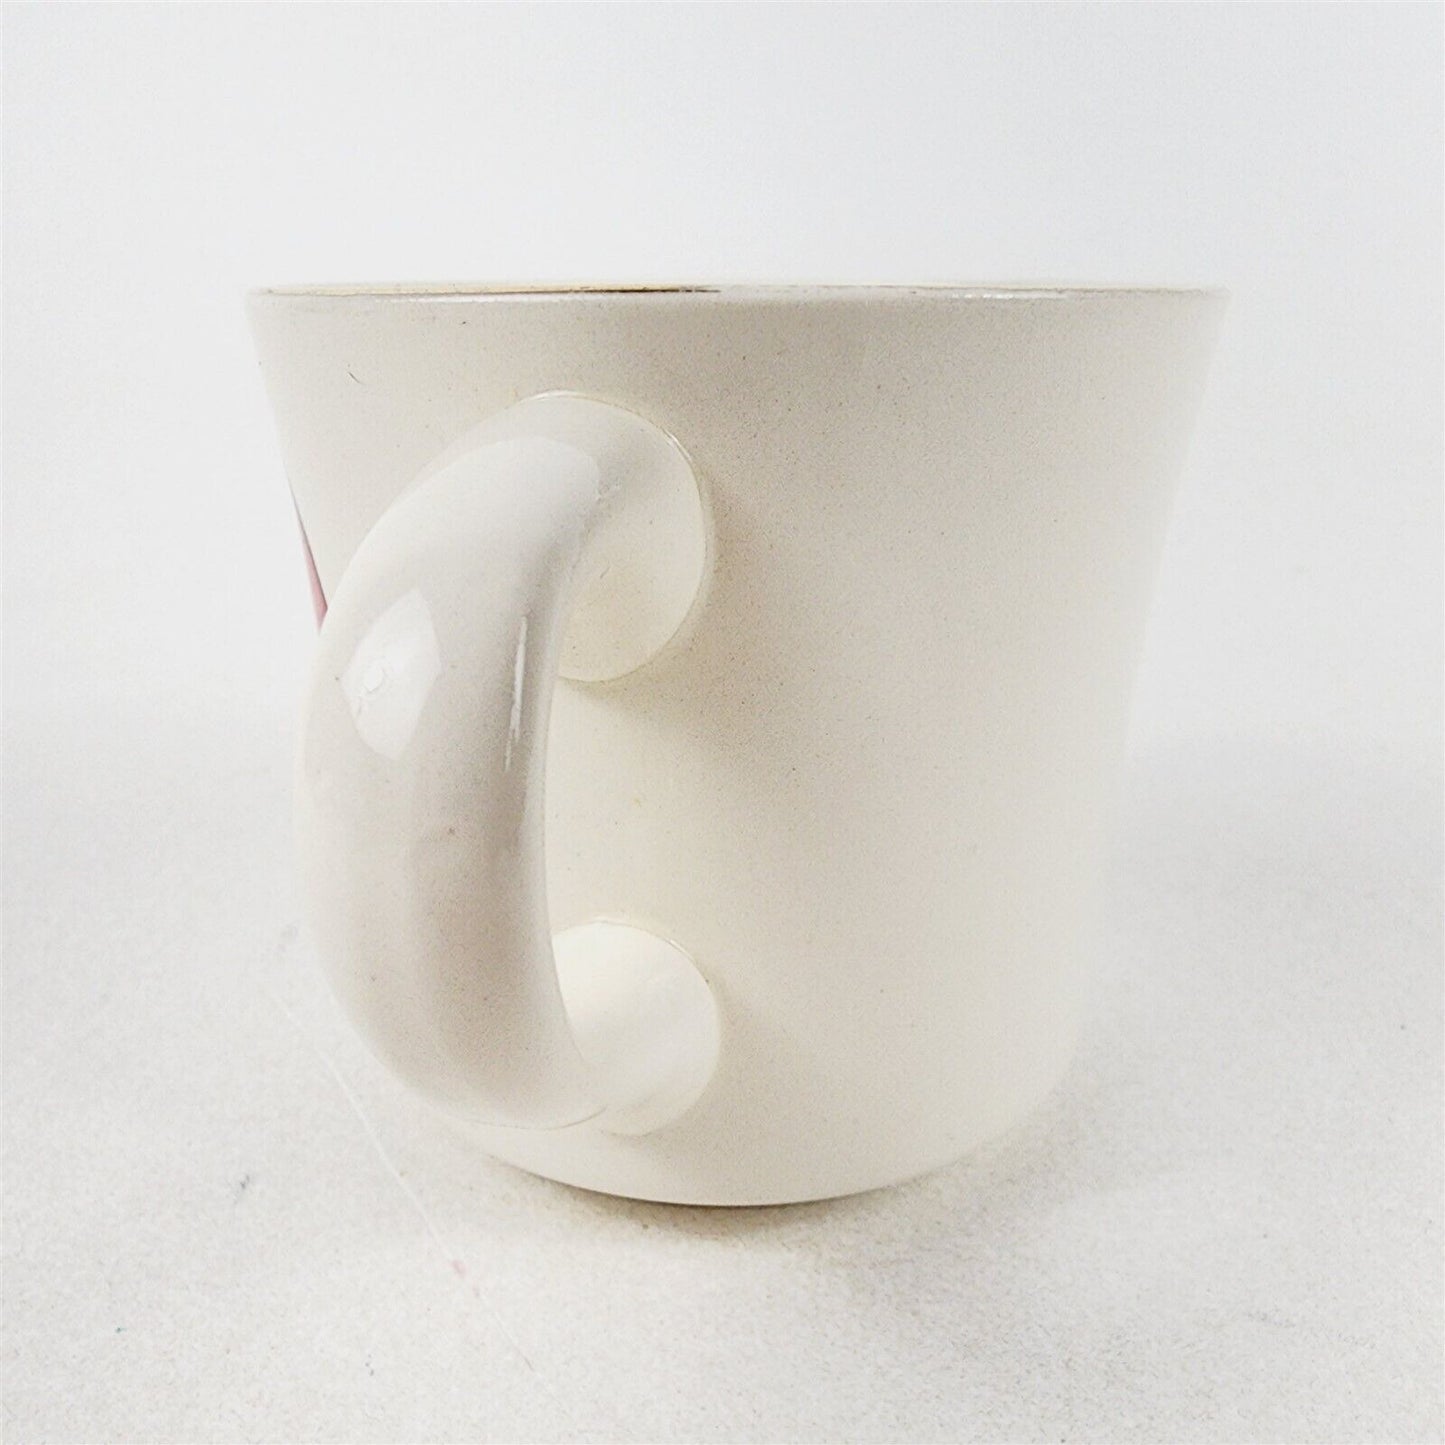 Vintage 1976 1776 Bicntennial Coffe Cup Mug Personalized Sierra Madre - 3 1/4"